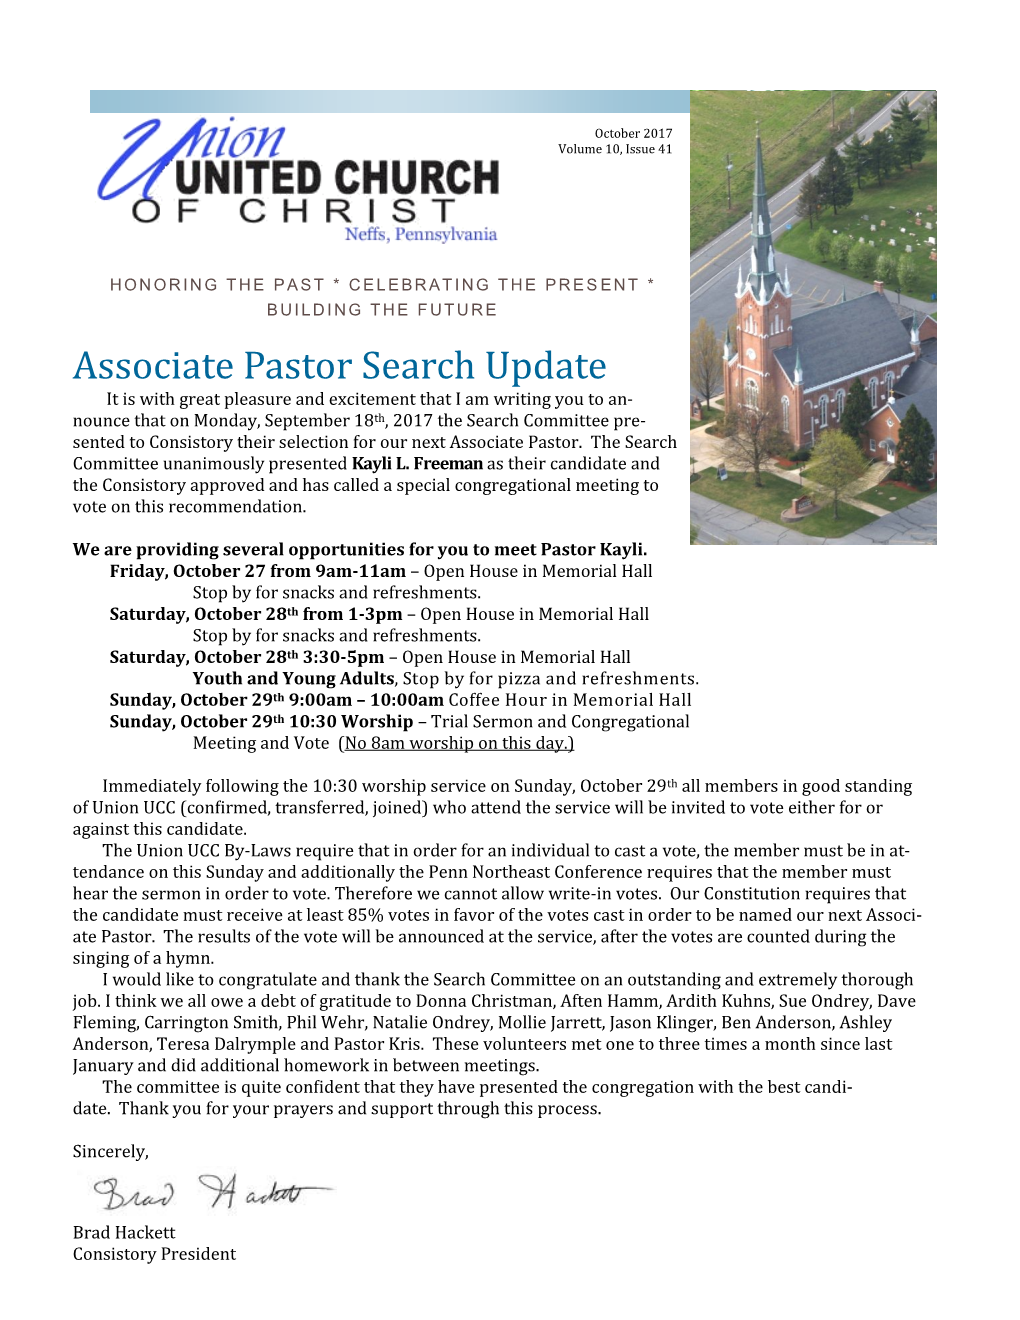 Associate Pastor Search Update